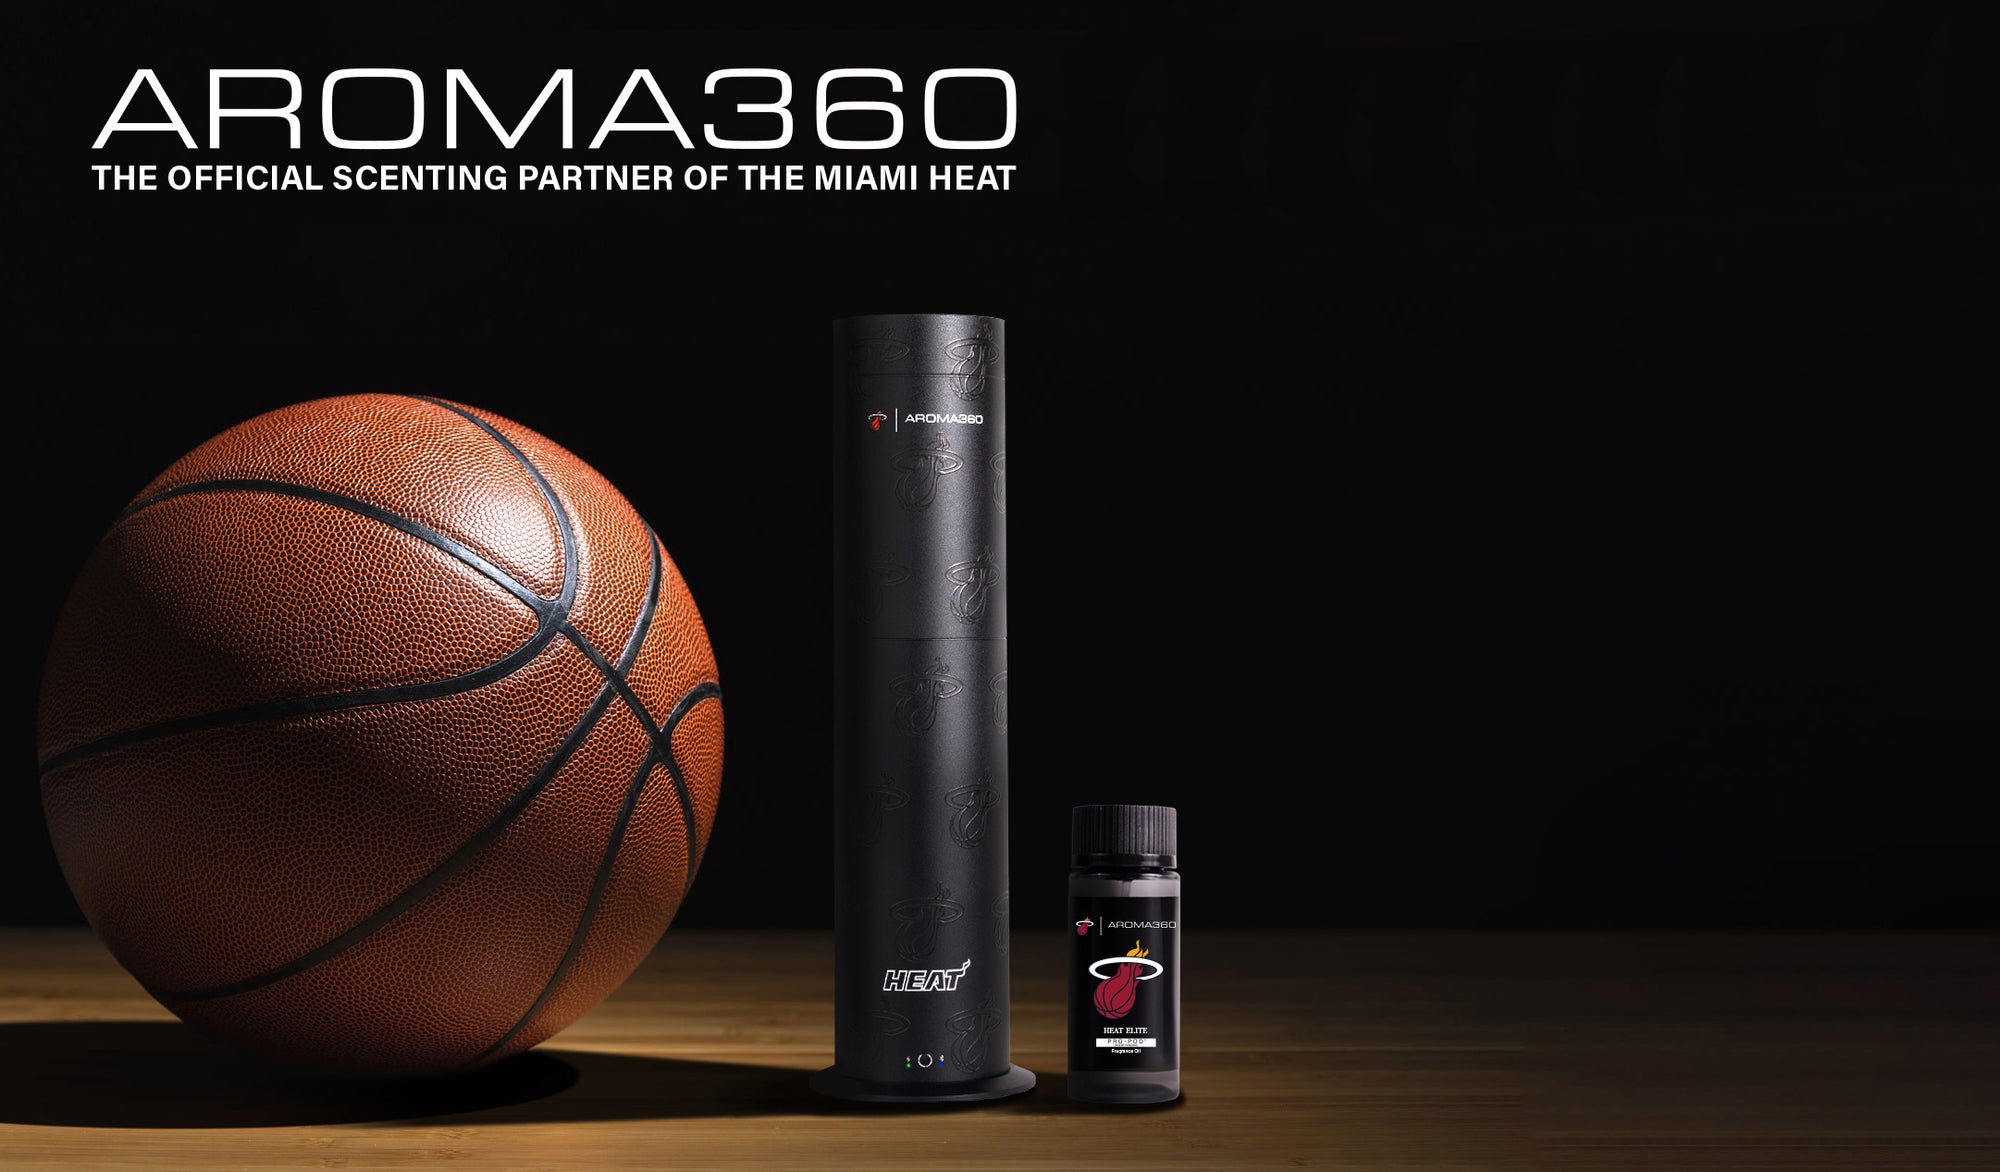 Aroma360 scoort groot met Miami Heat Partnership